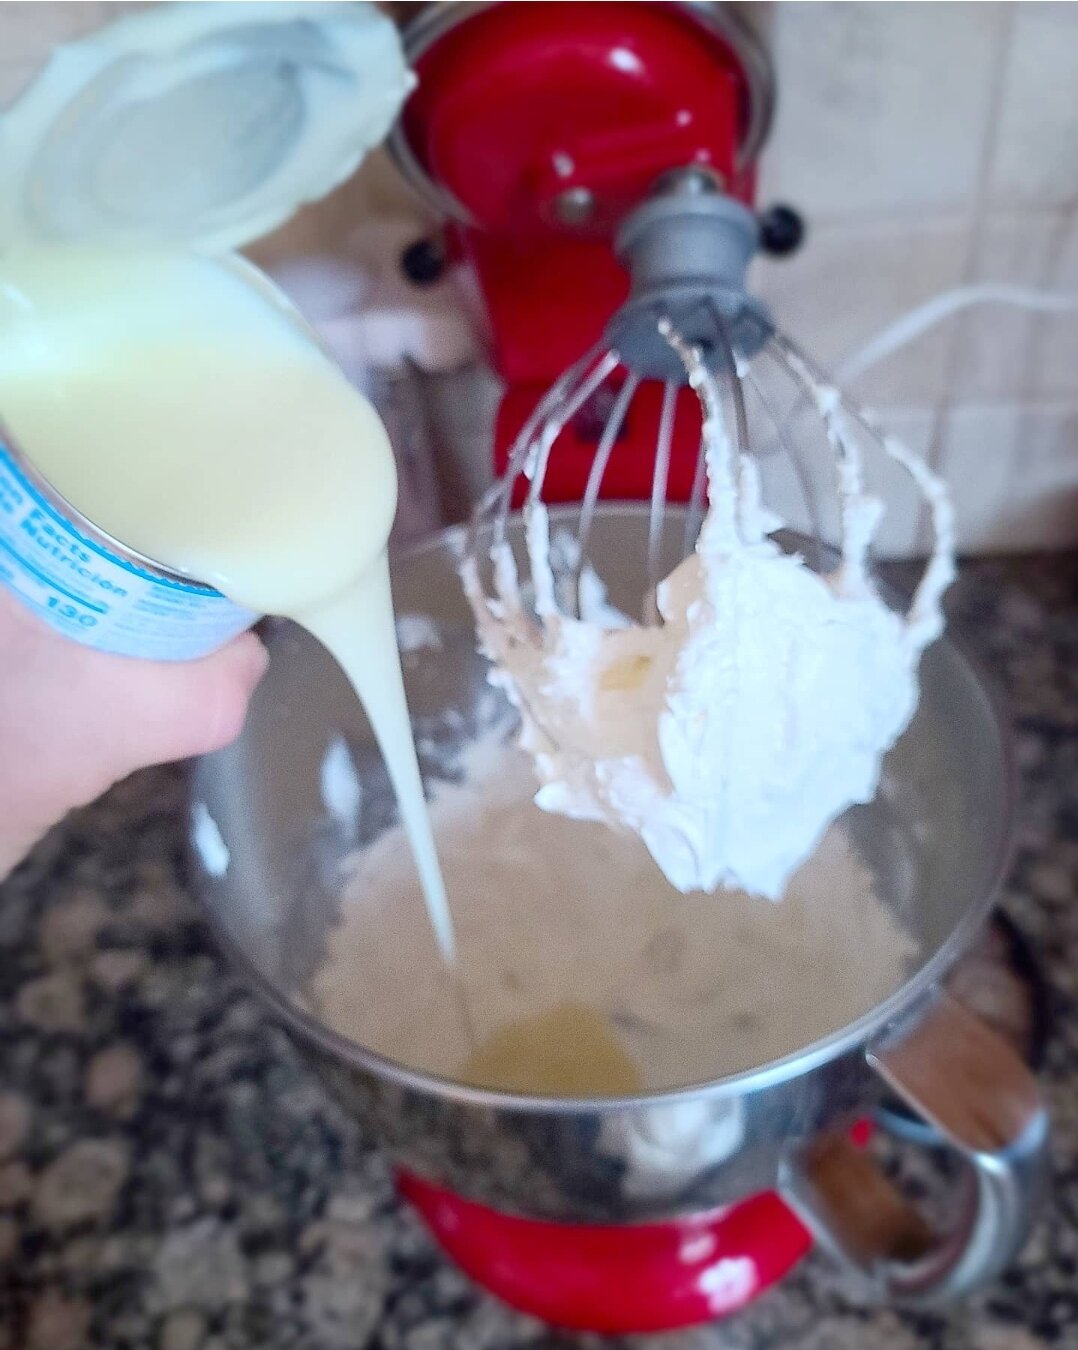 adding sweetened condensed milk